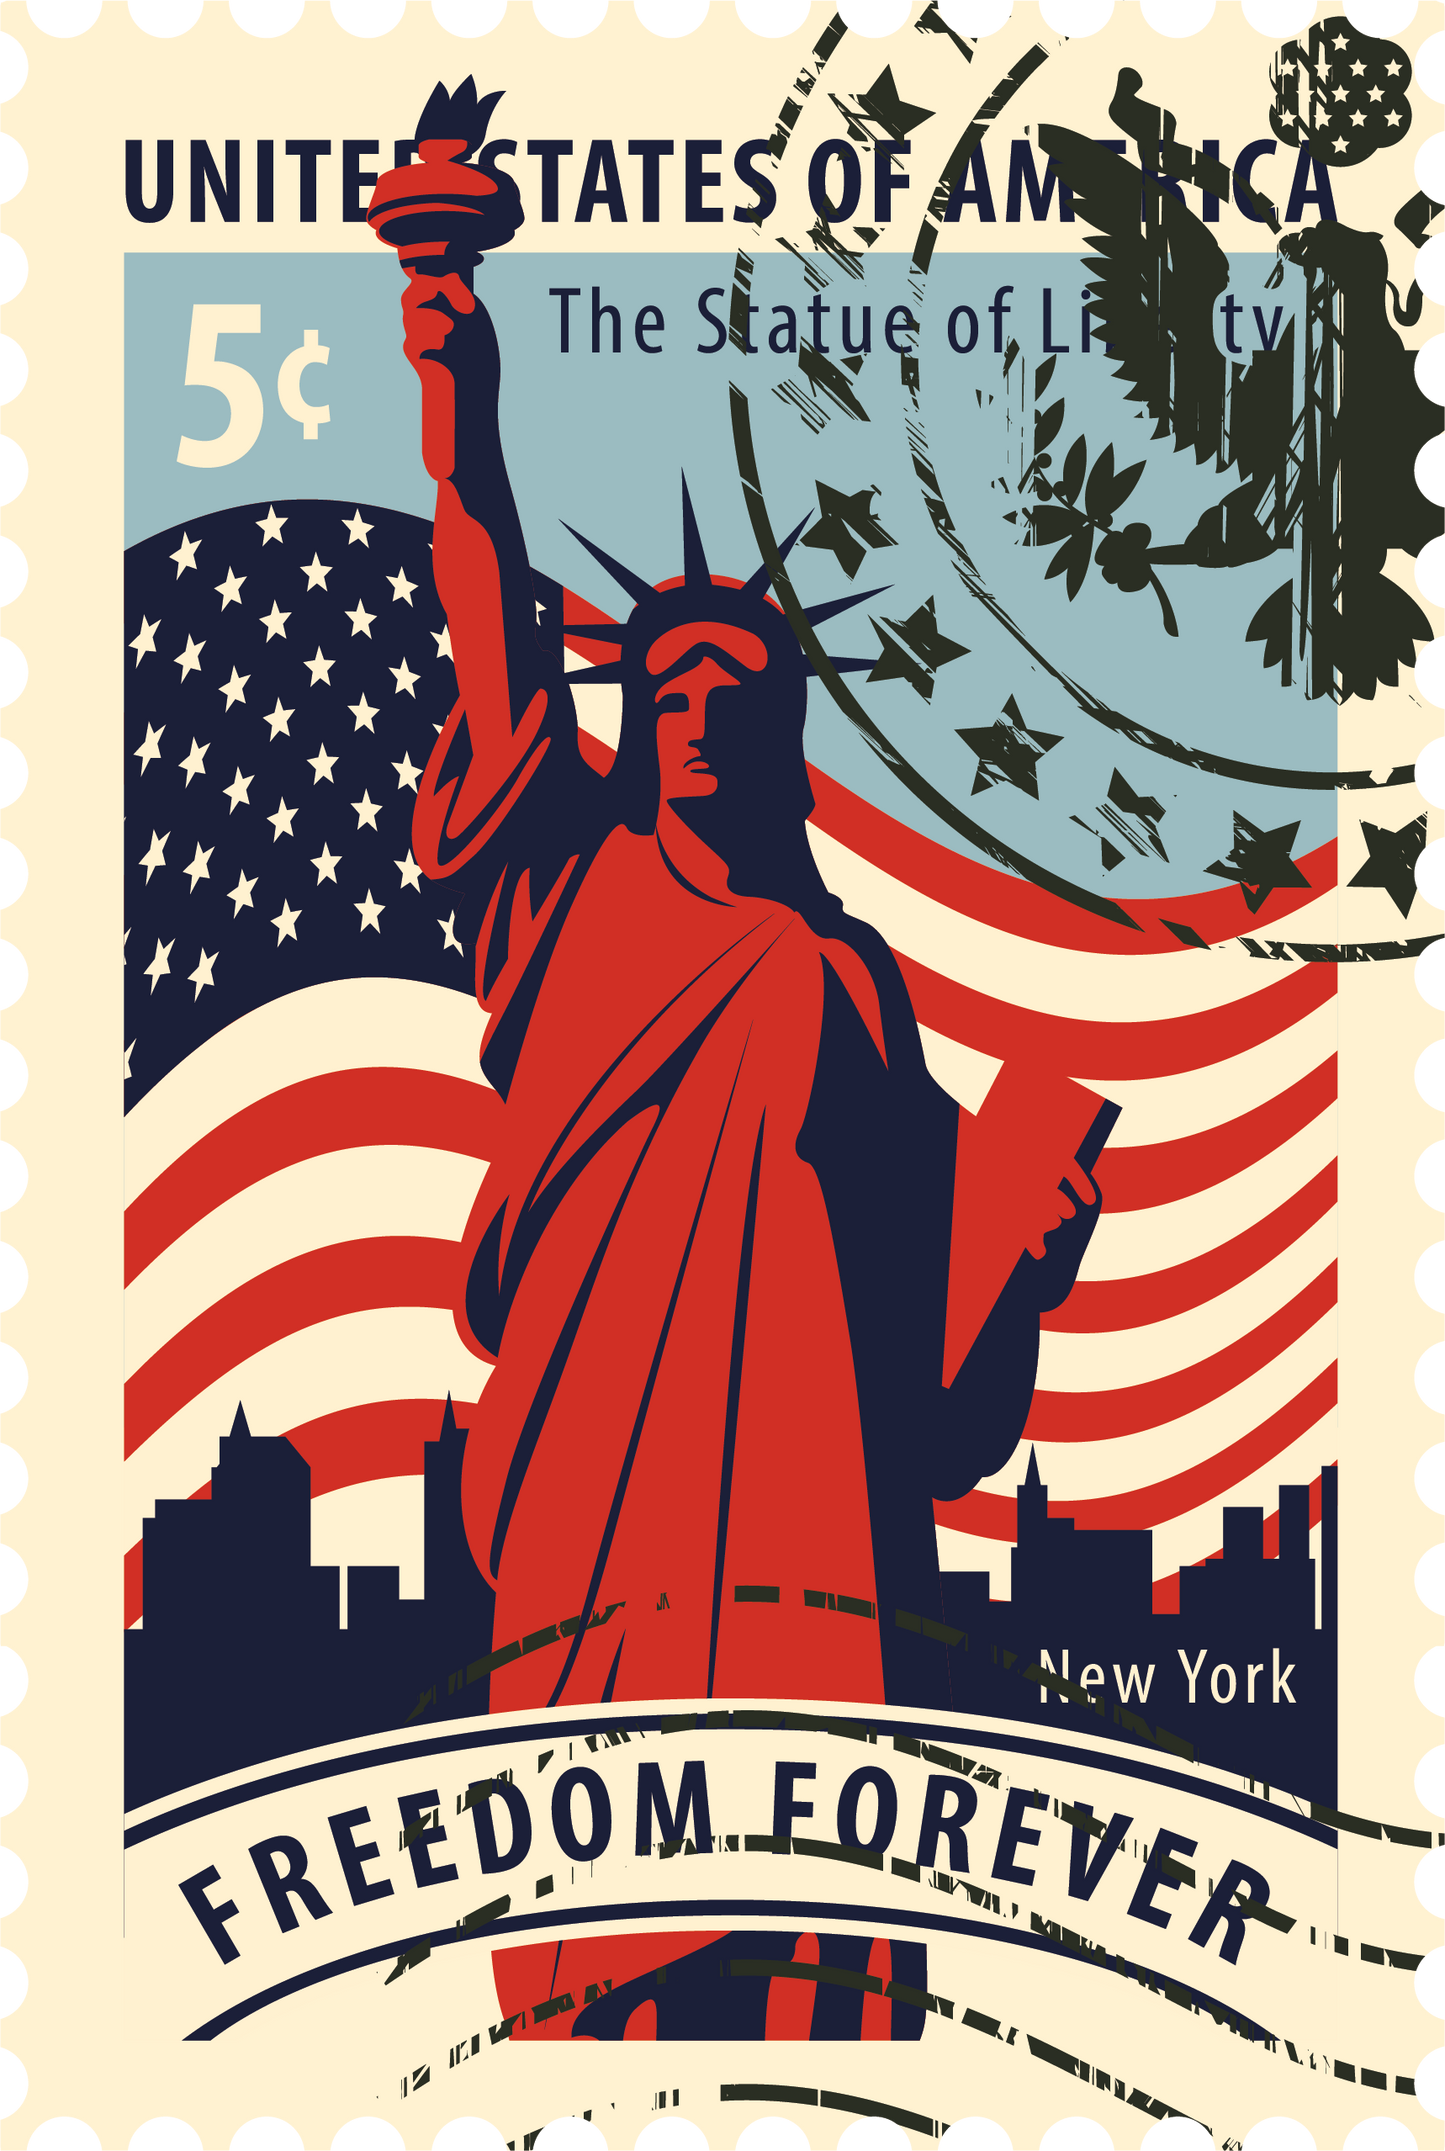 Freedom Stamp